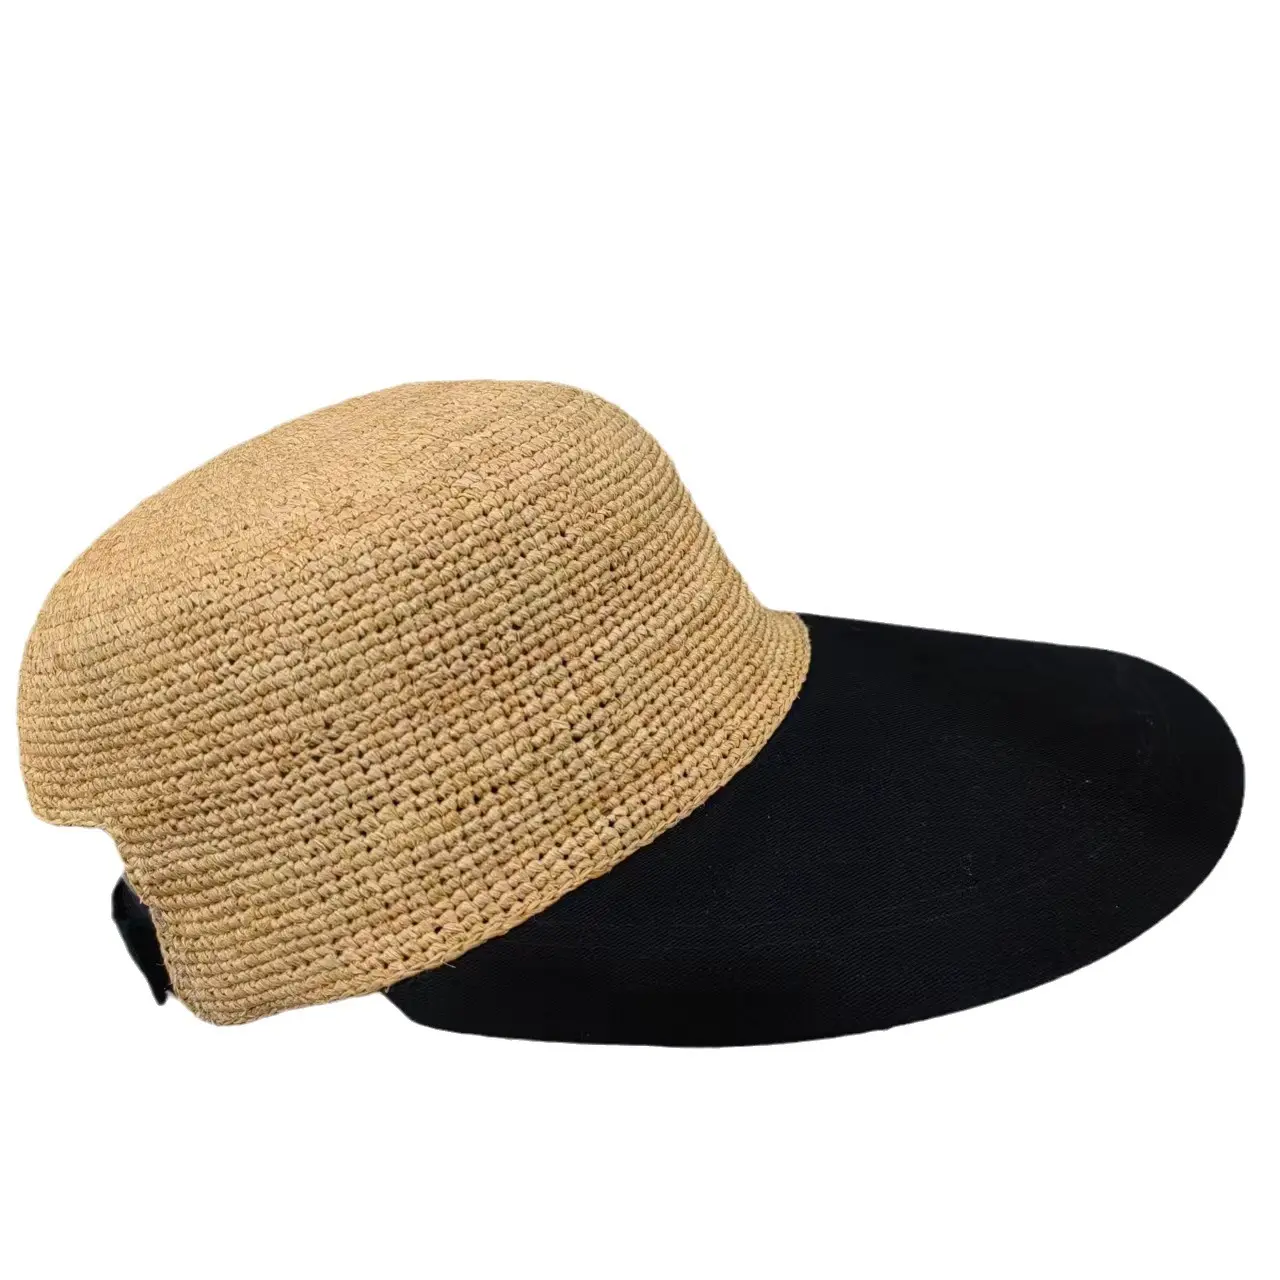 women big Sun Hats Wide Brim raffia Straw beach hat for women baseball hat cap for Travel Outdoor